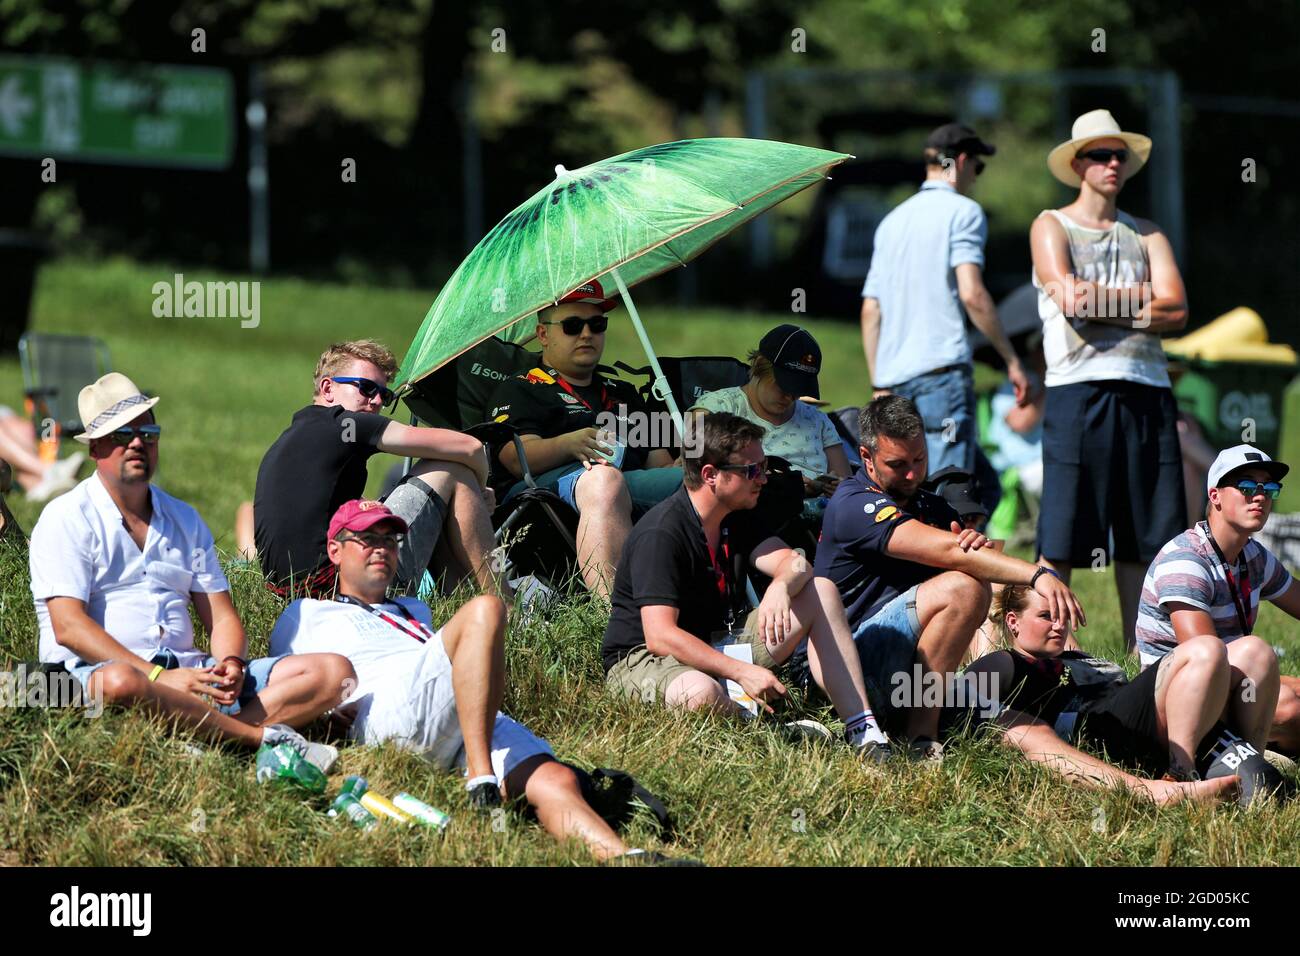 Fans. Austrian Grand Prix, Friday 28th June 2019. Spielberg, Austria. Stock Photo